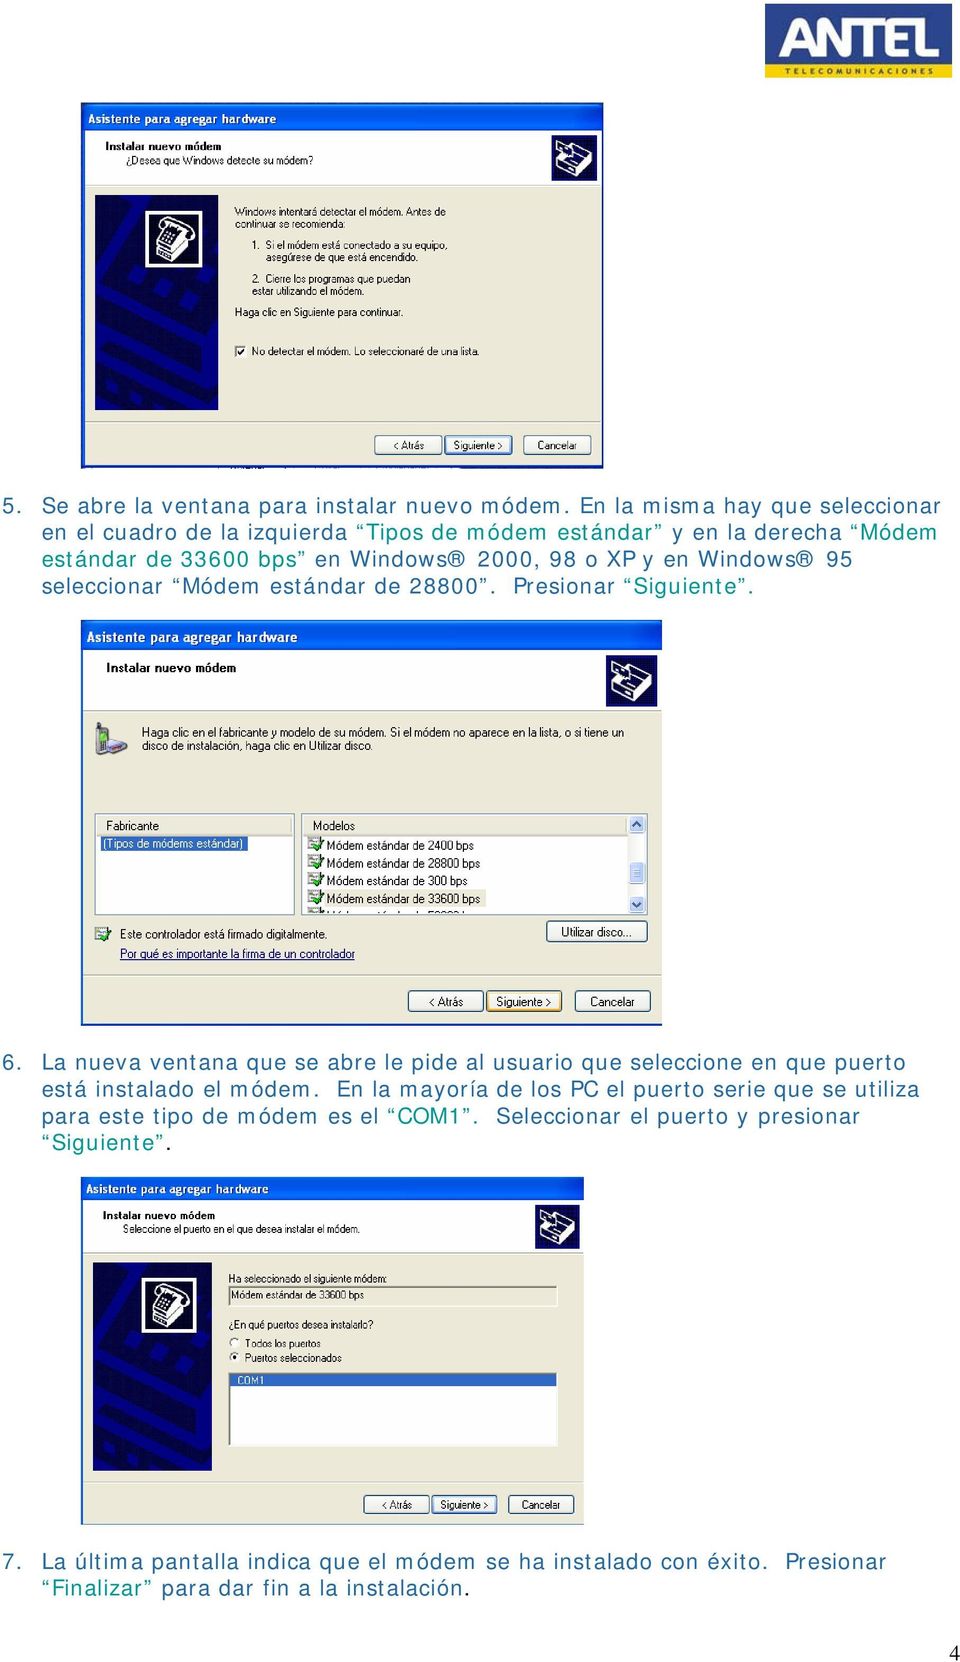 Windows 95 seleccionar Módem estándar de 28800. Presionar Siguiente. 6.